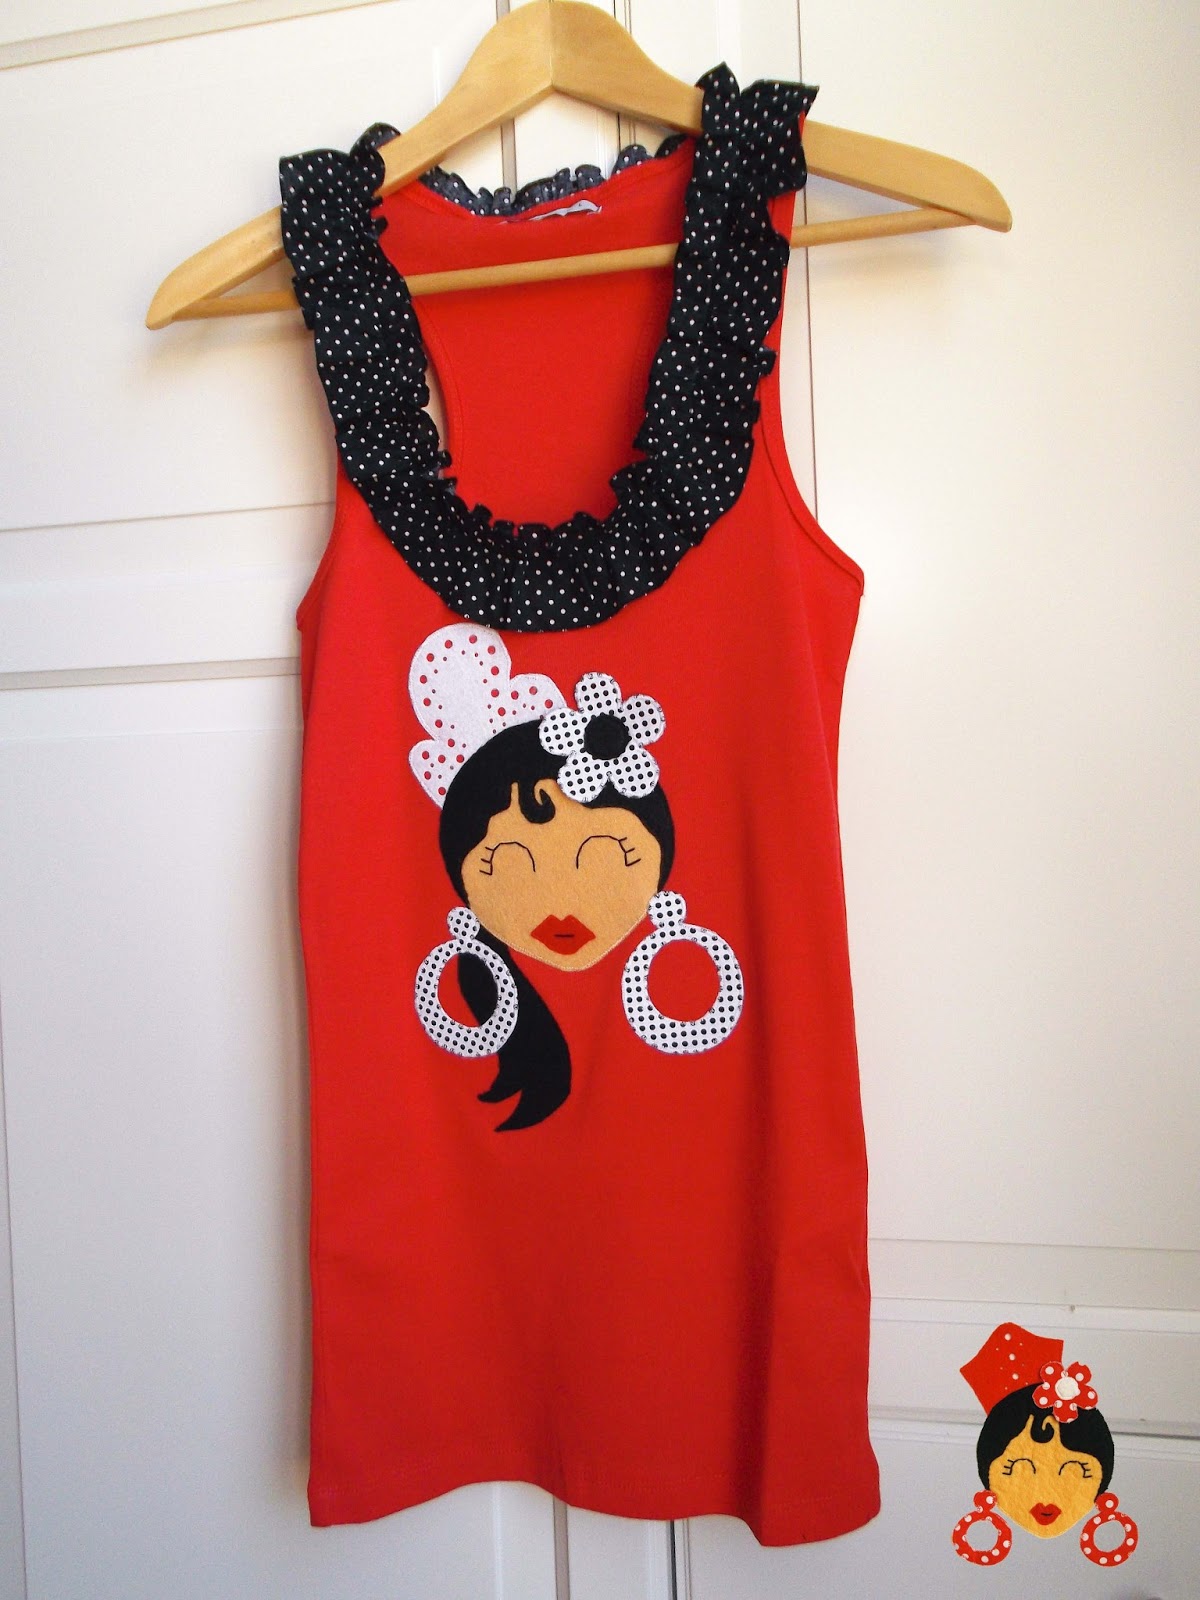 pikapic: Camisetas flamencas guay